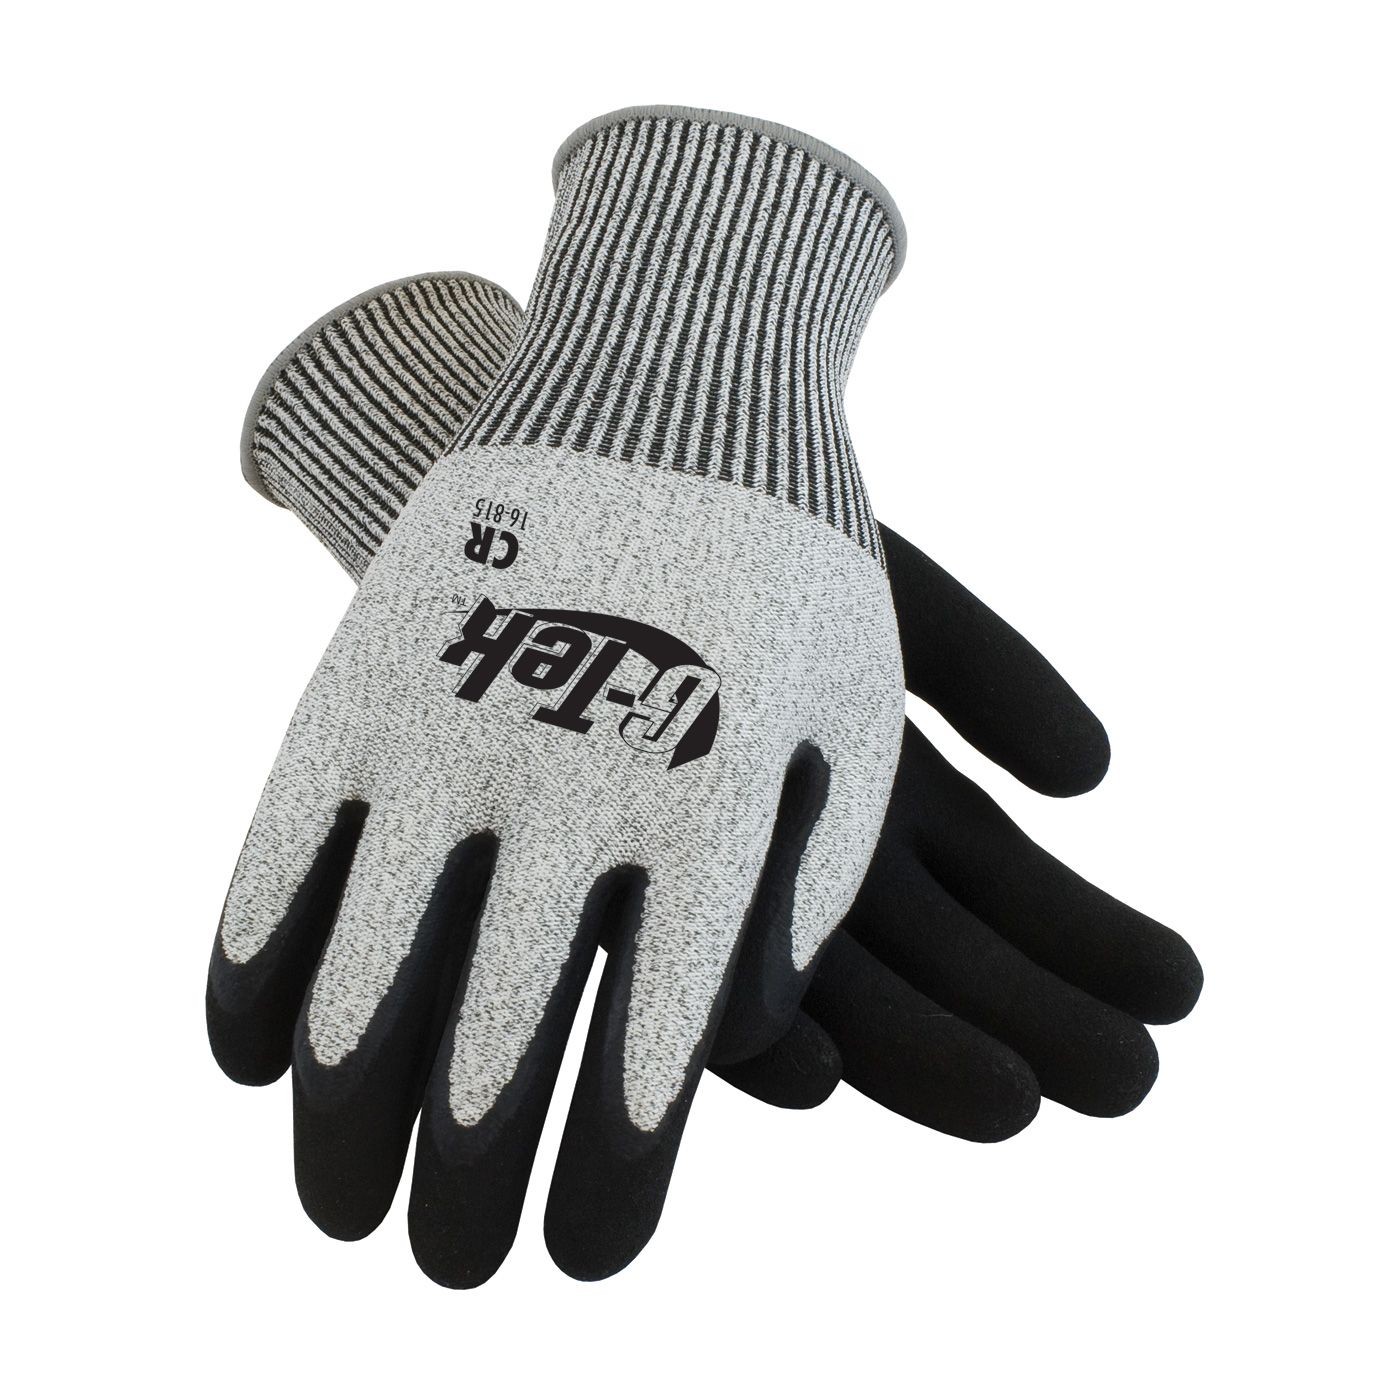 PIP 16-815 G-Tek CR Seamless Knit Work Glove 12/Pairs